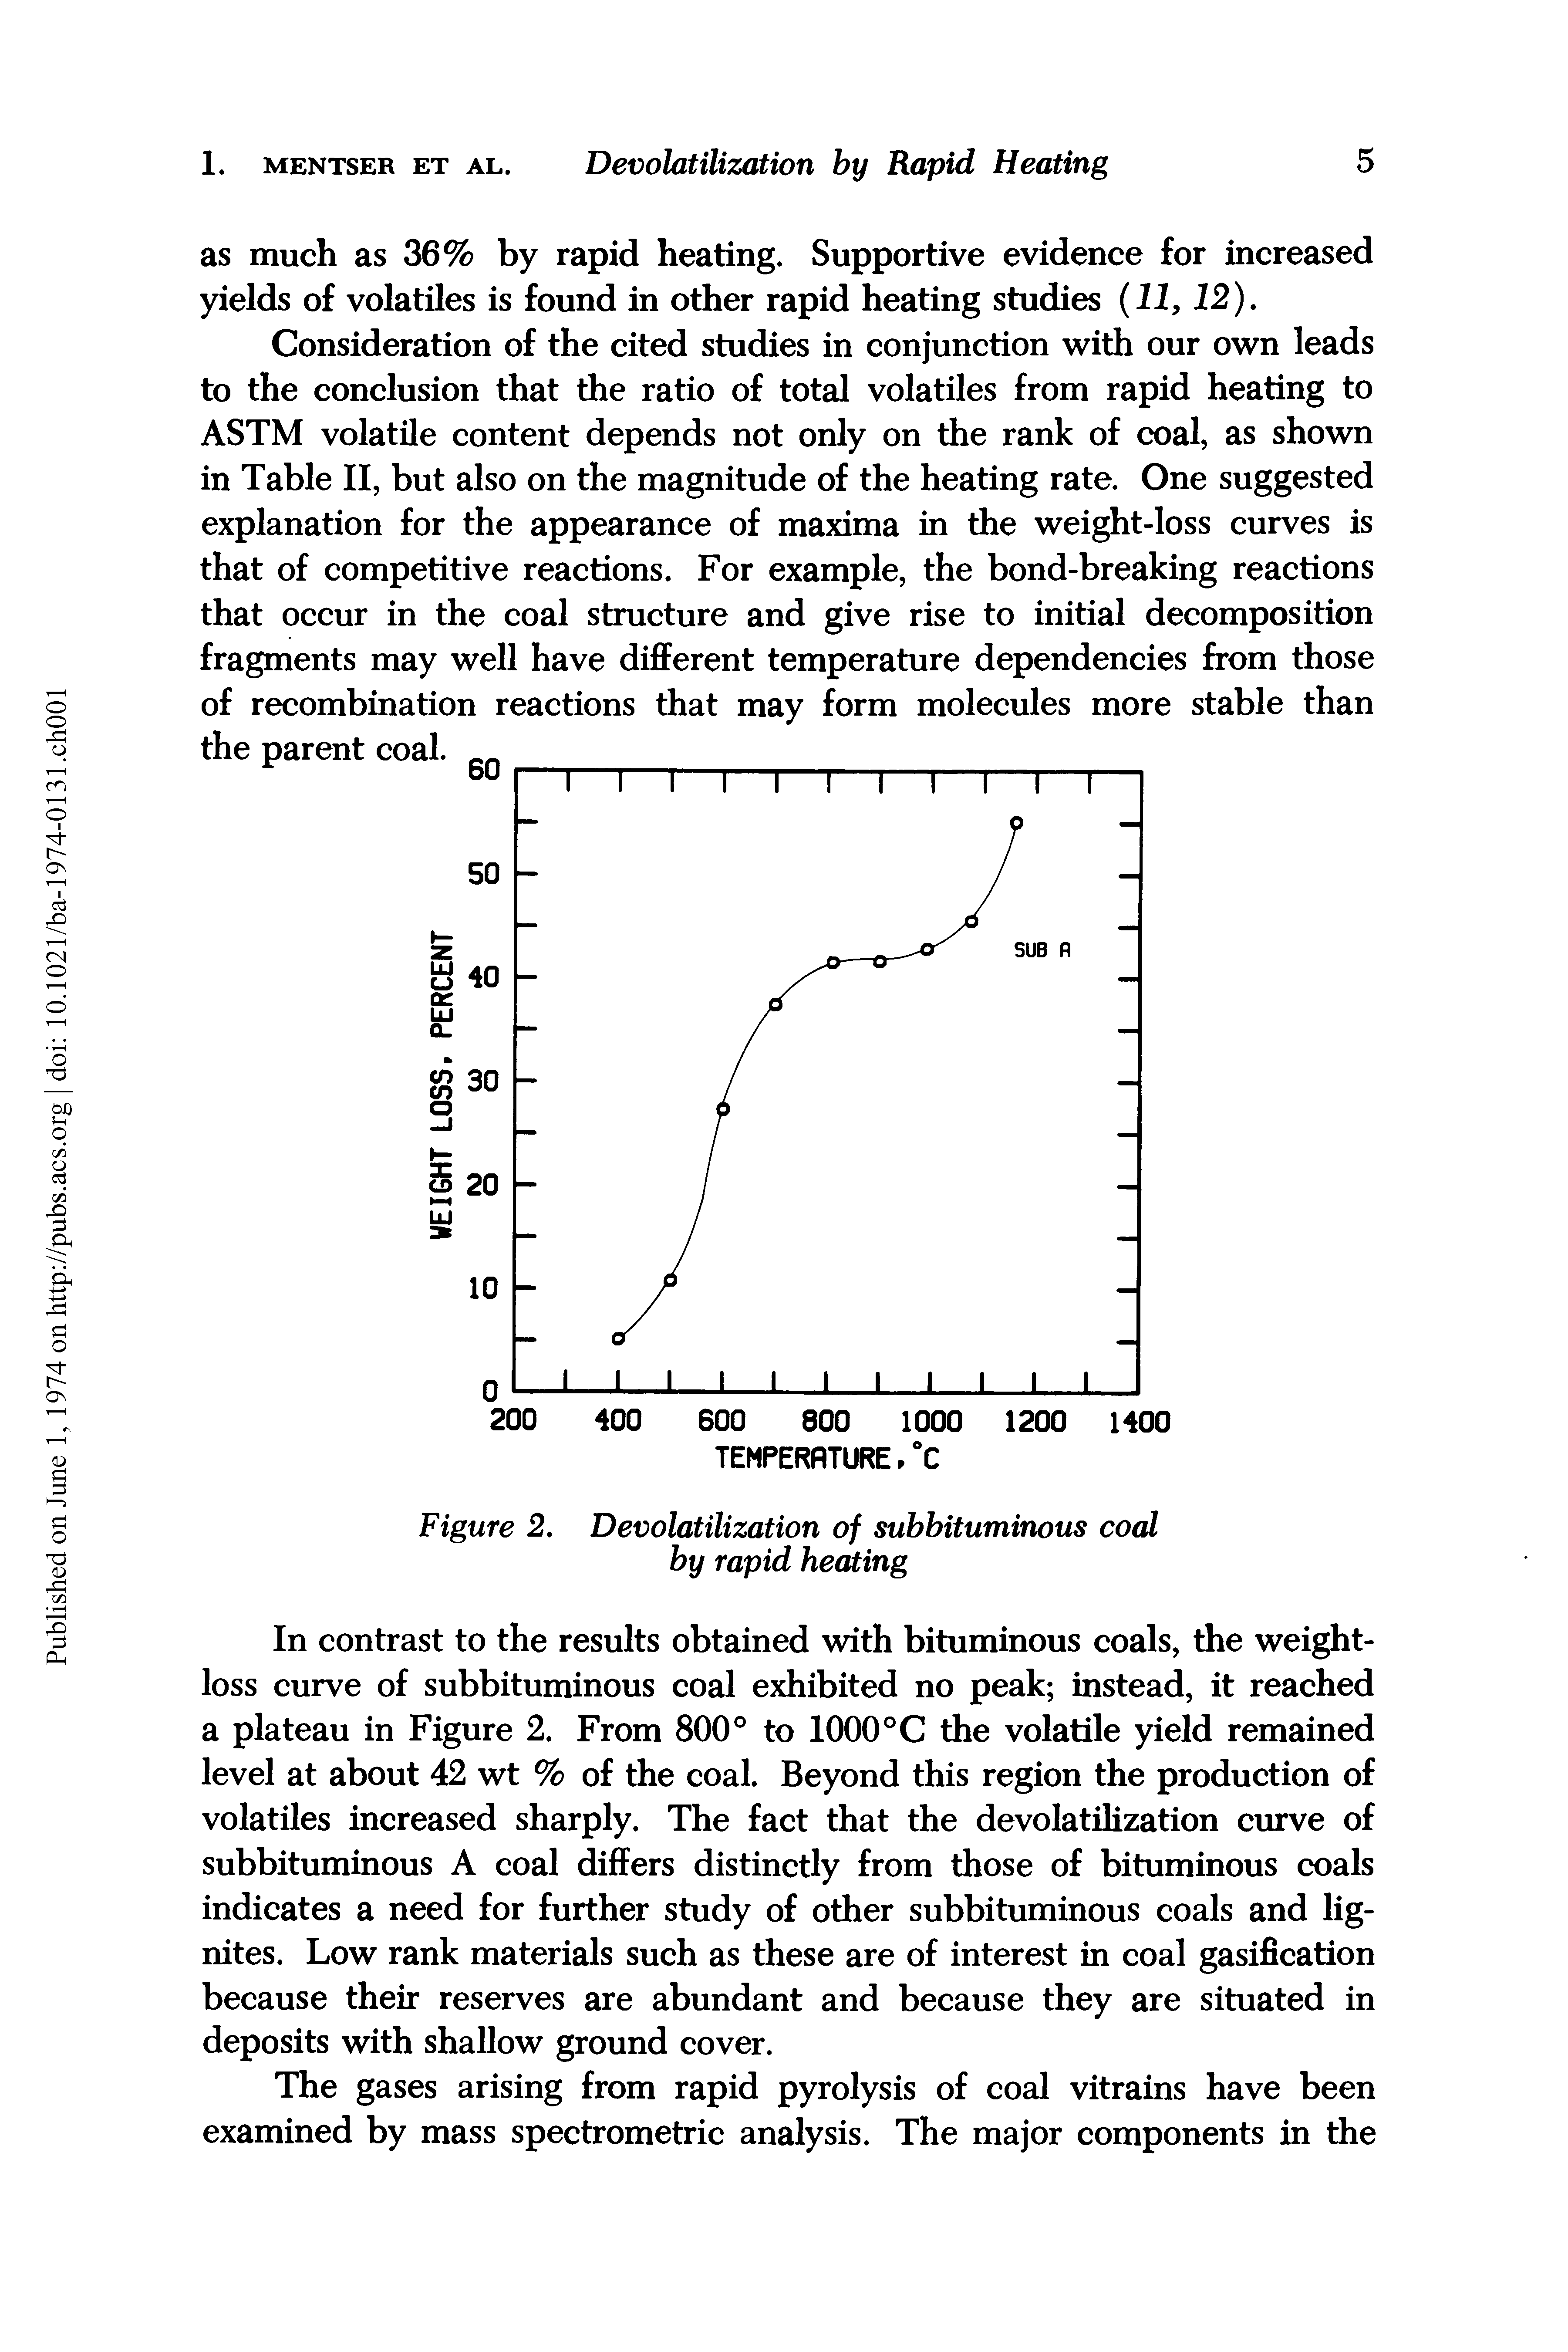 Figure 2. Devolatilization of subbituminous coal by rapid heating...